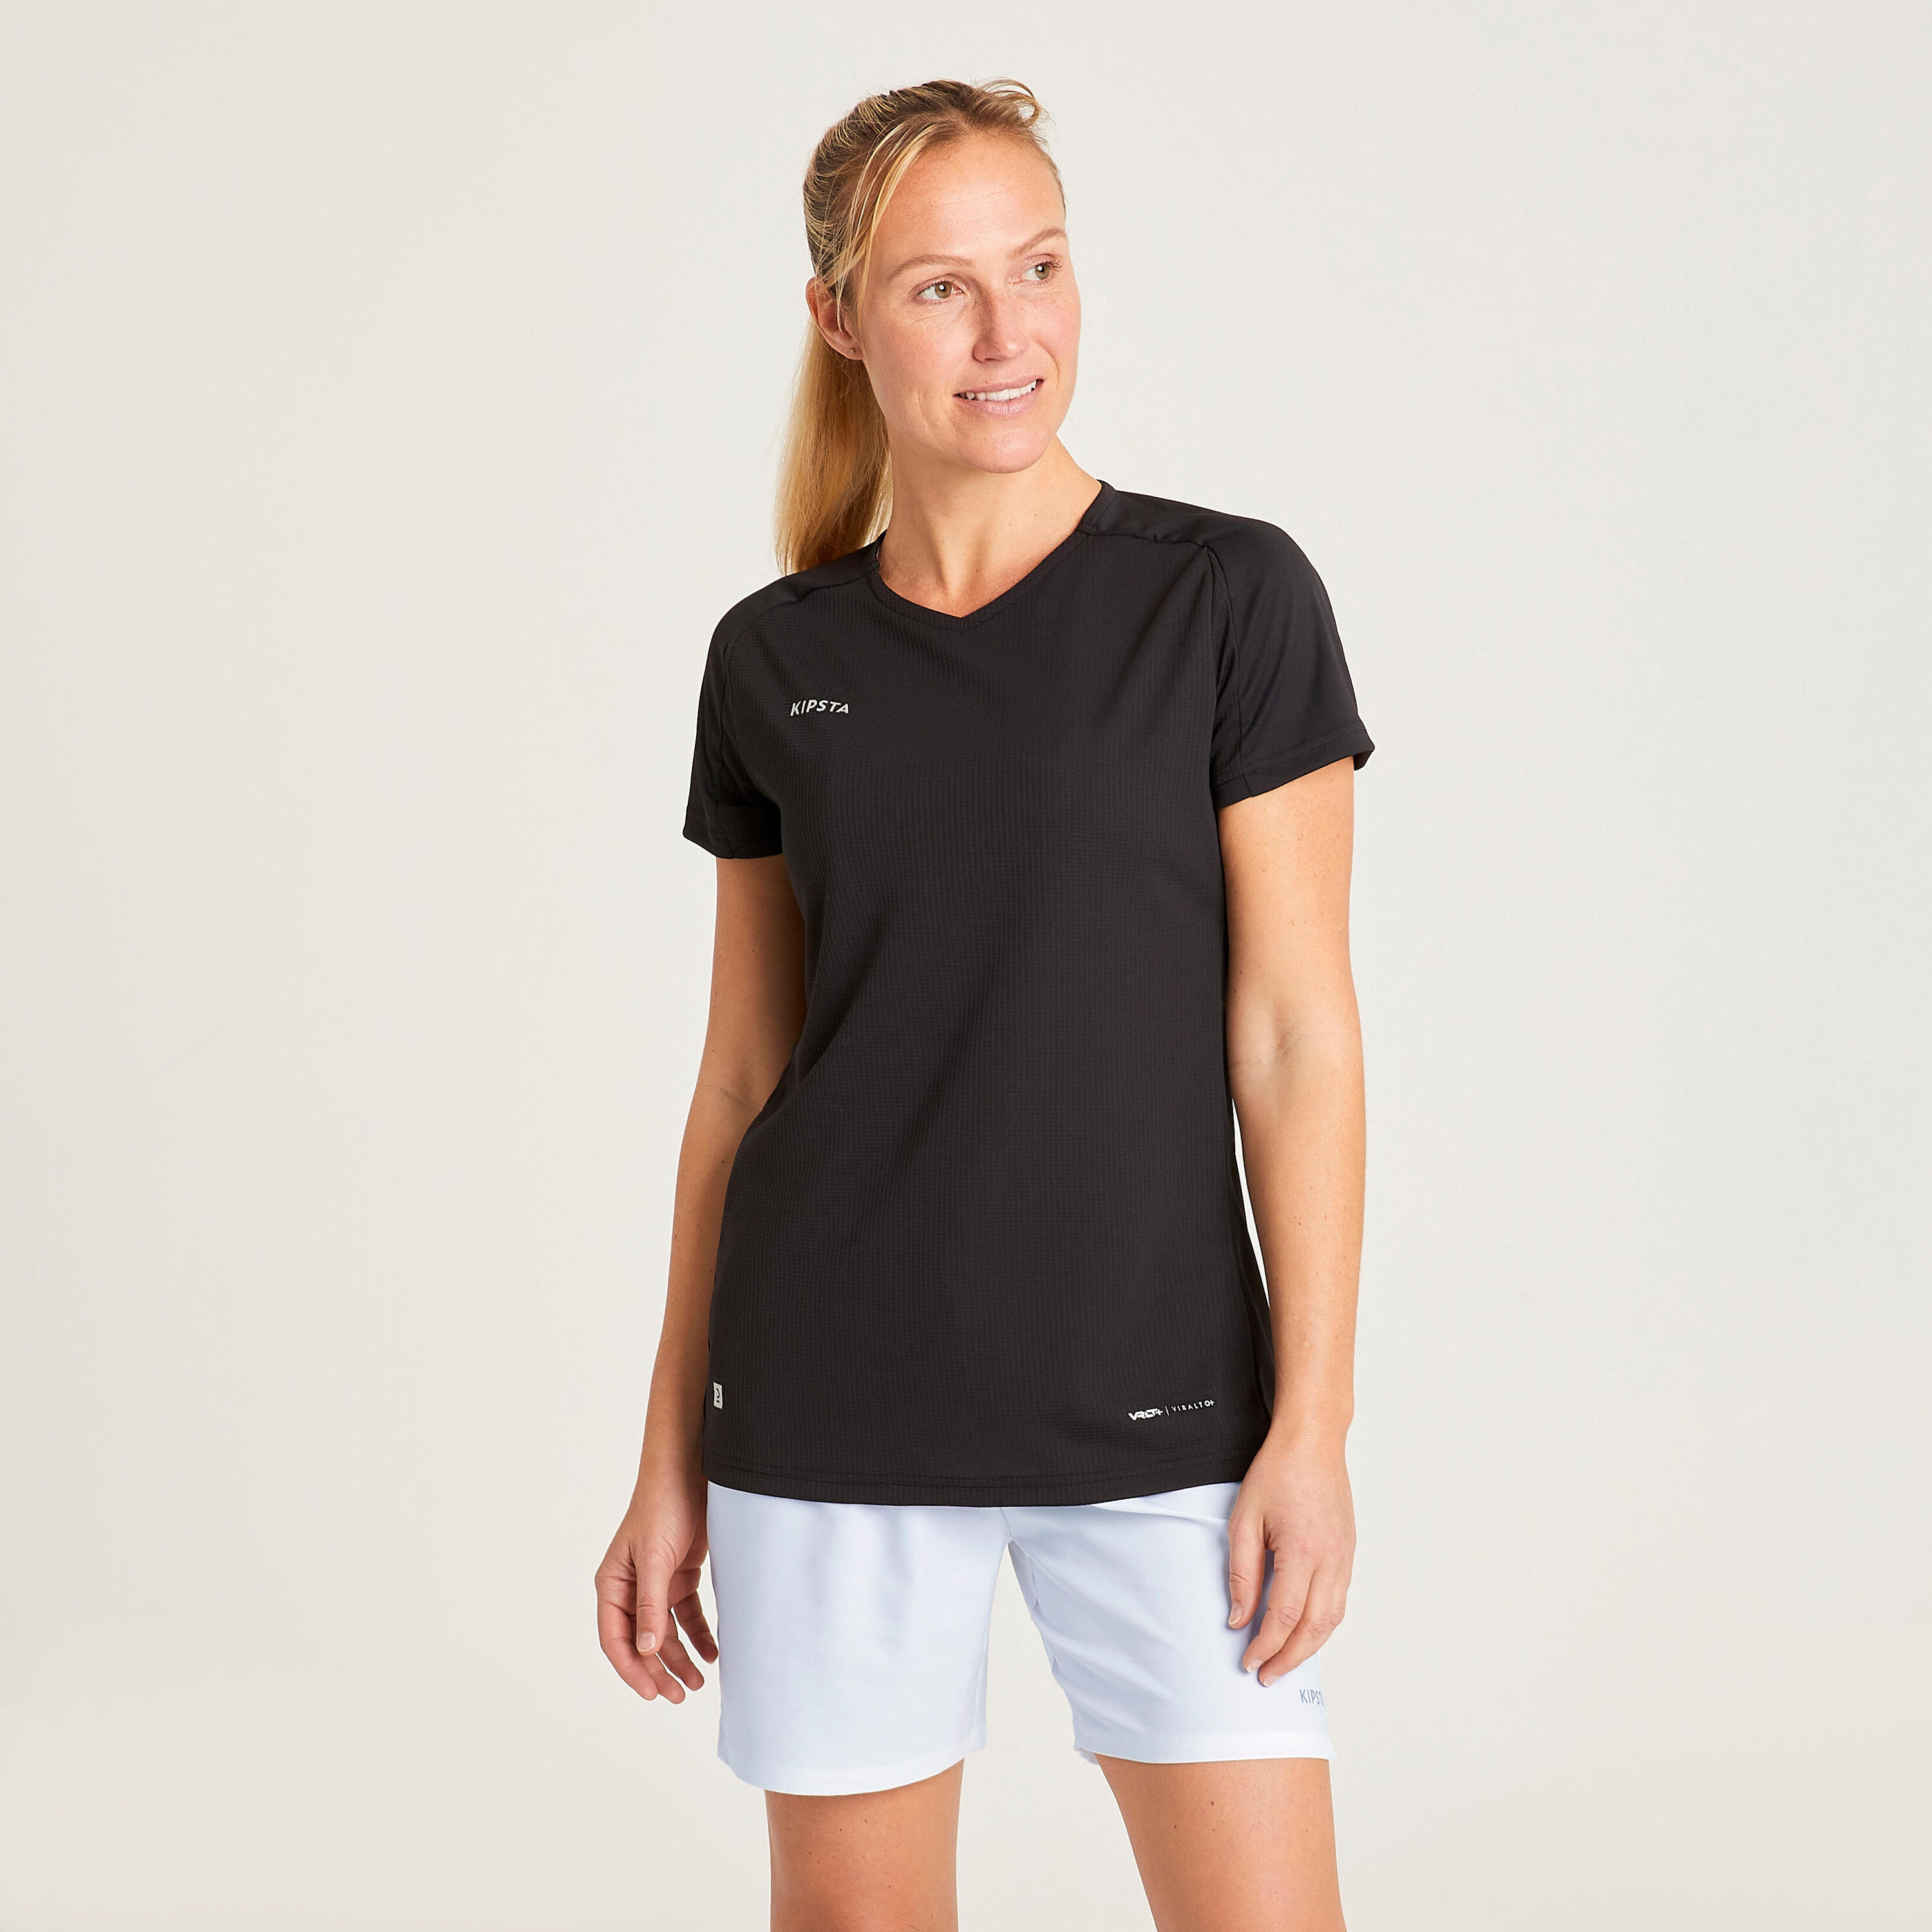 Women's Plain Football Shirt - Black 16/29